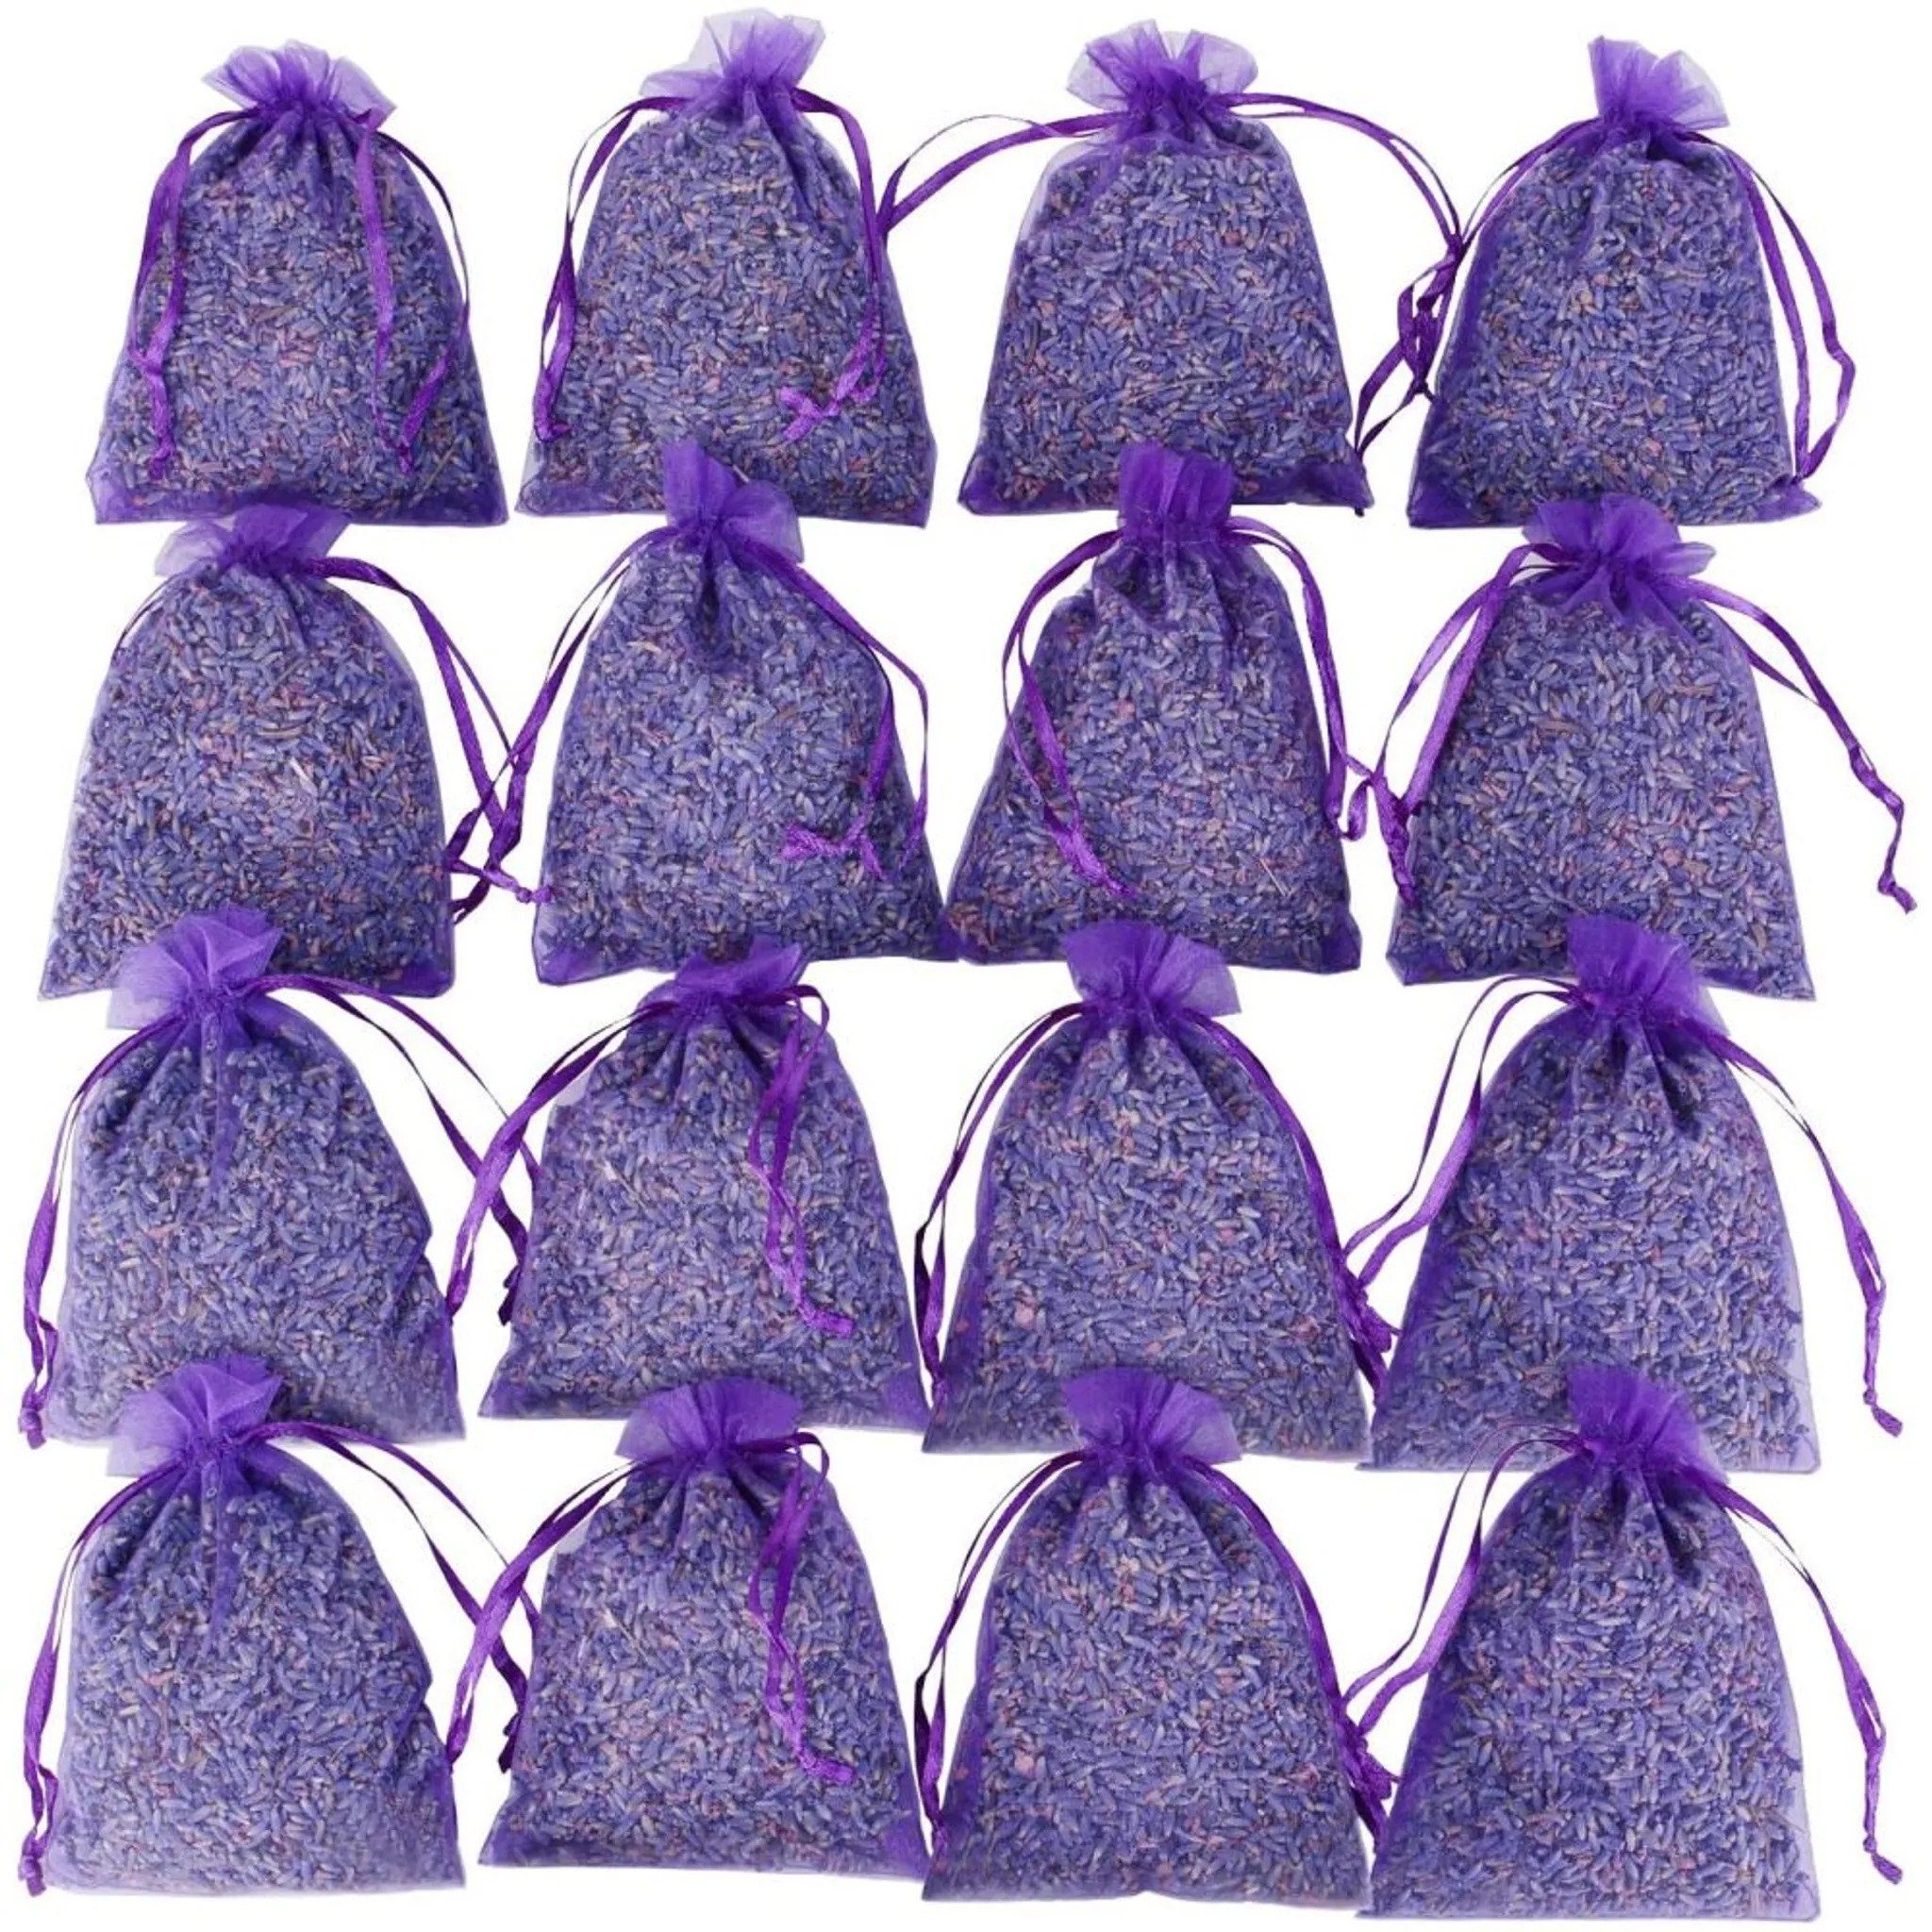 TUABUR Duftbeutel Lavendel Duftsäckchen: 16 Duftsäckchen Lavendel getrocknet